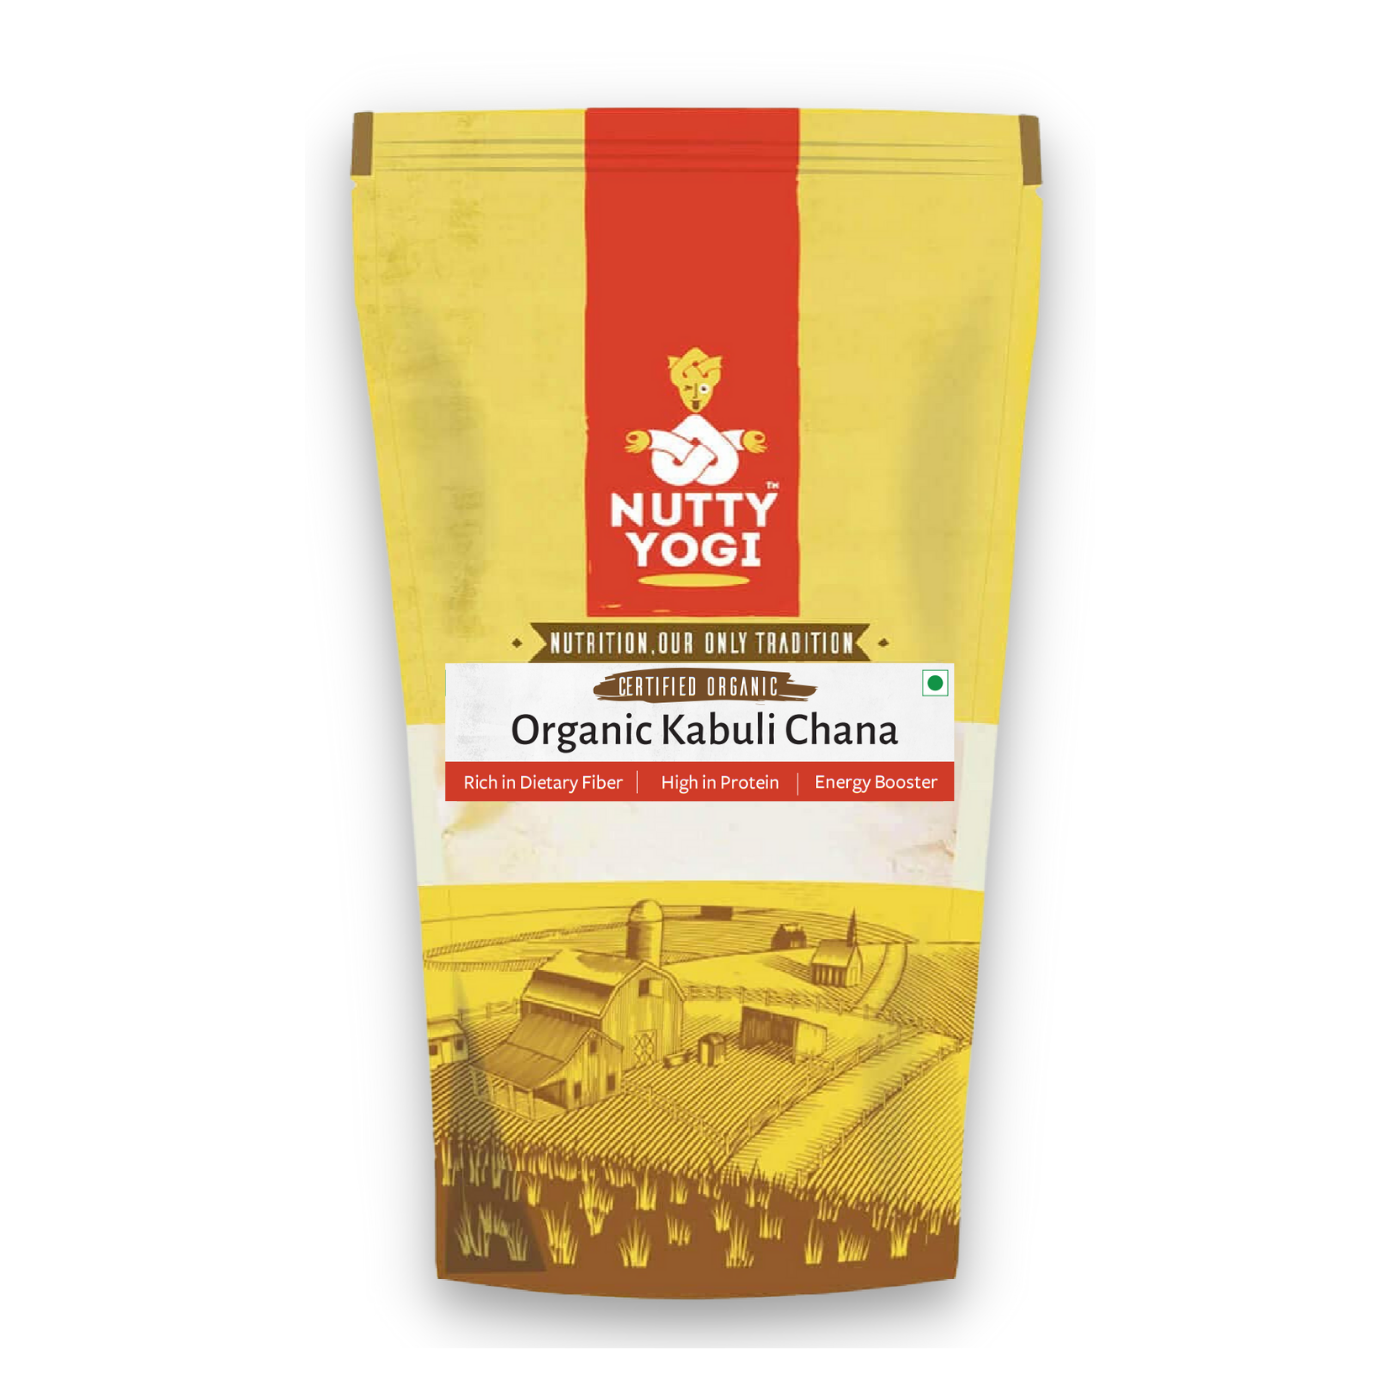 Nutty Yogi Organic Kabuli Chana